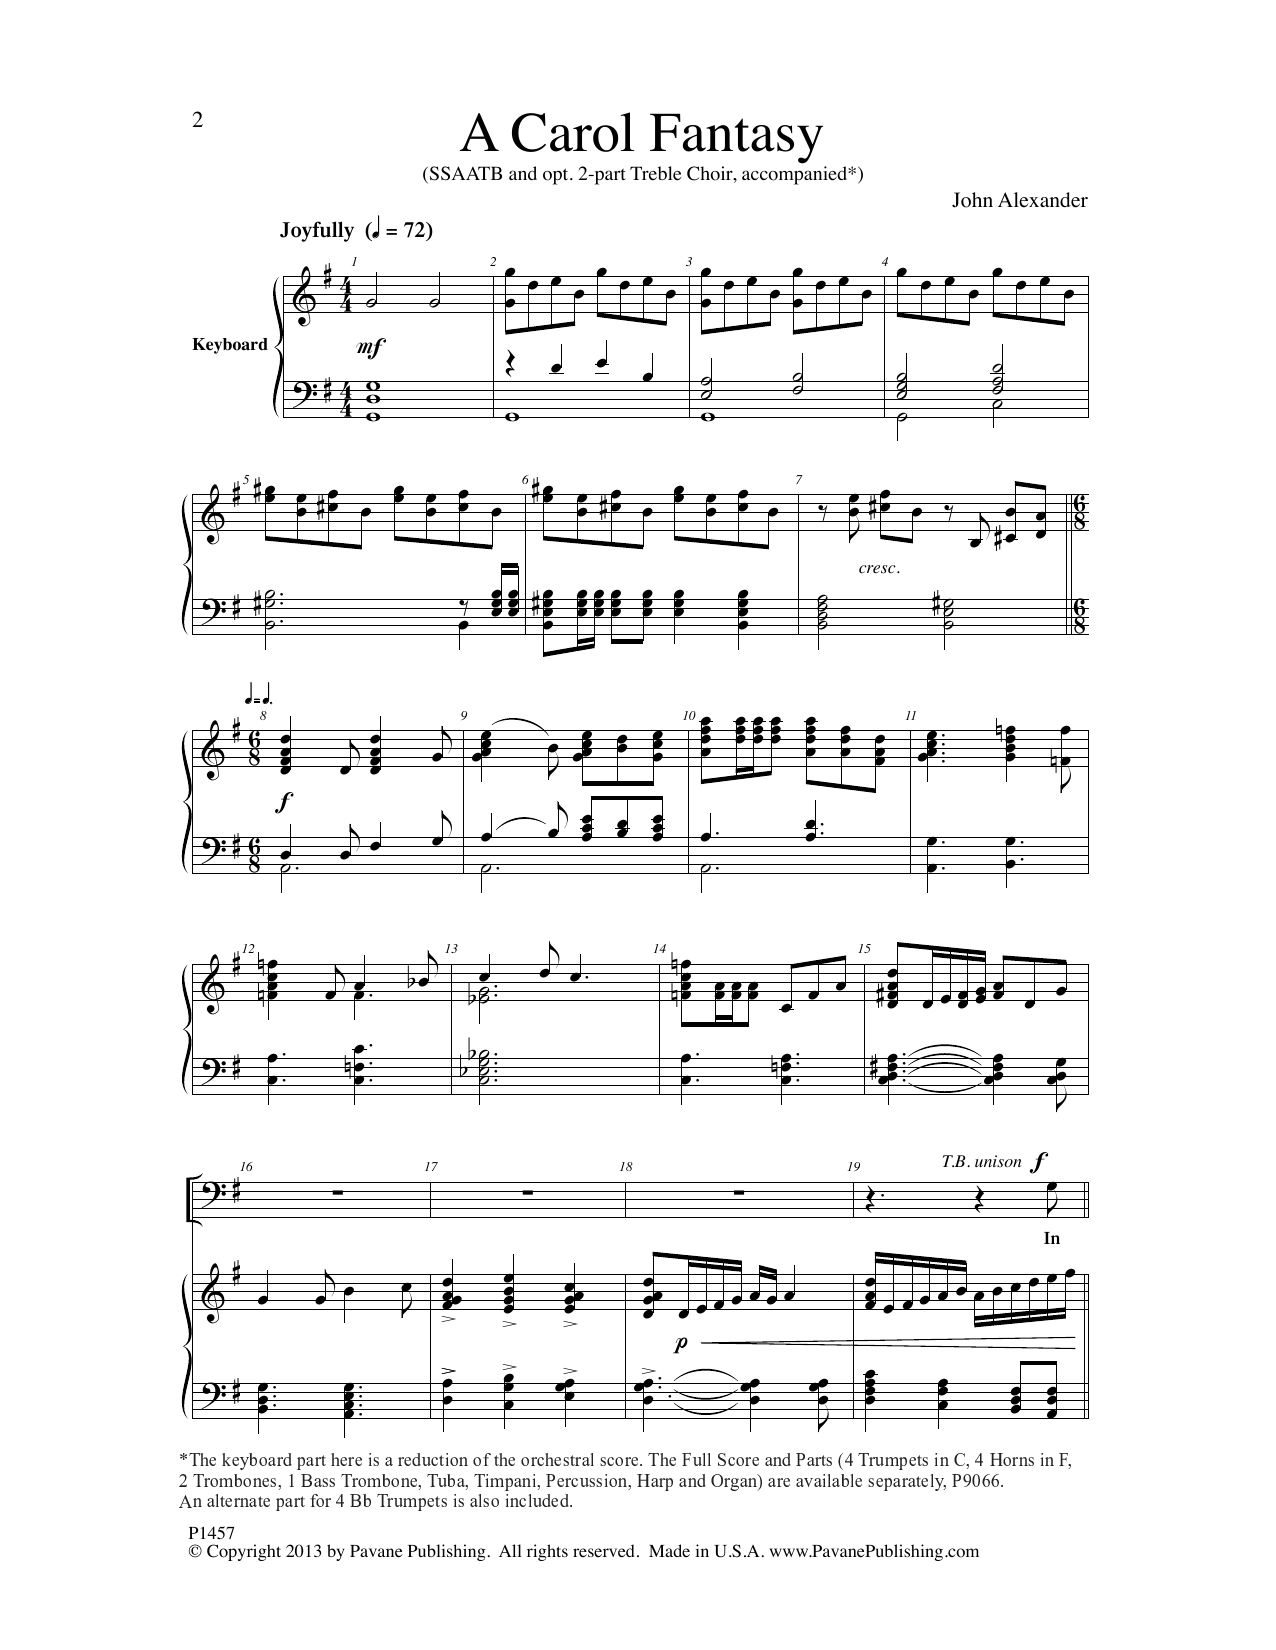 John Alexander A Carol Fantasy Sheet Music Notes & Chords for Choral - Download or Print PDF